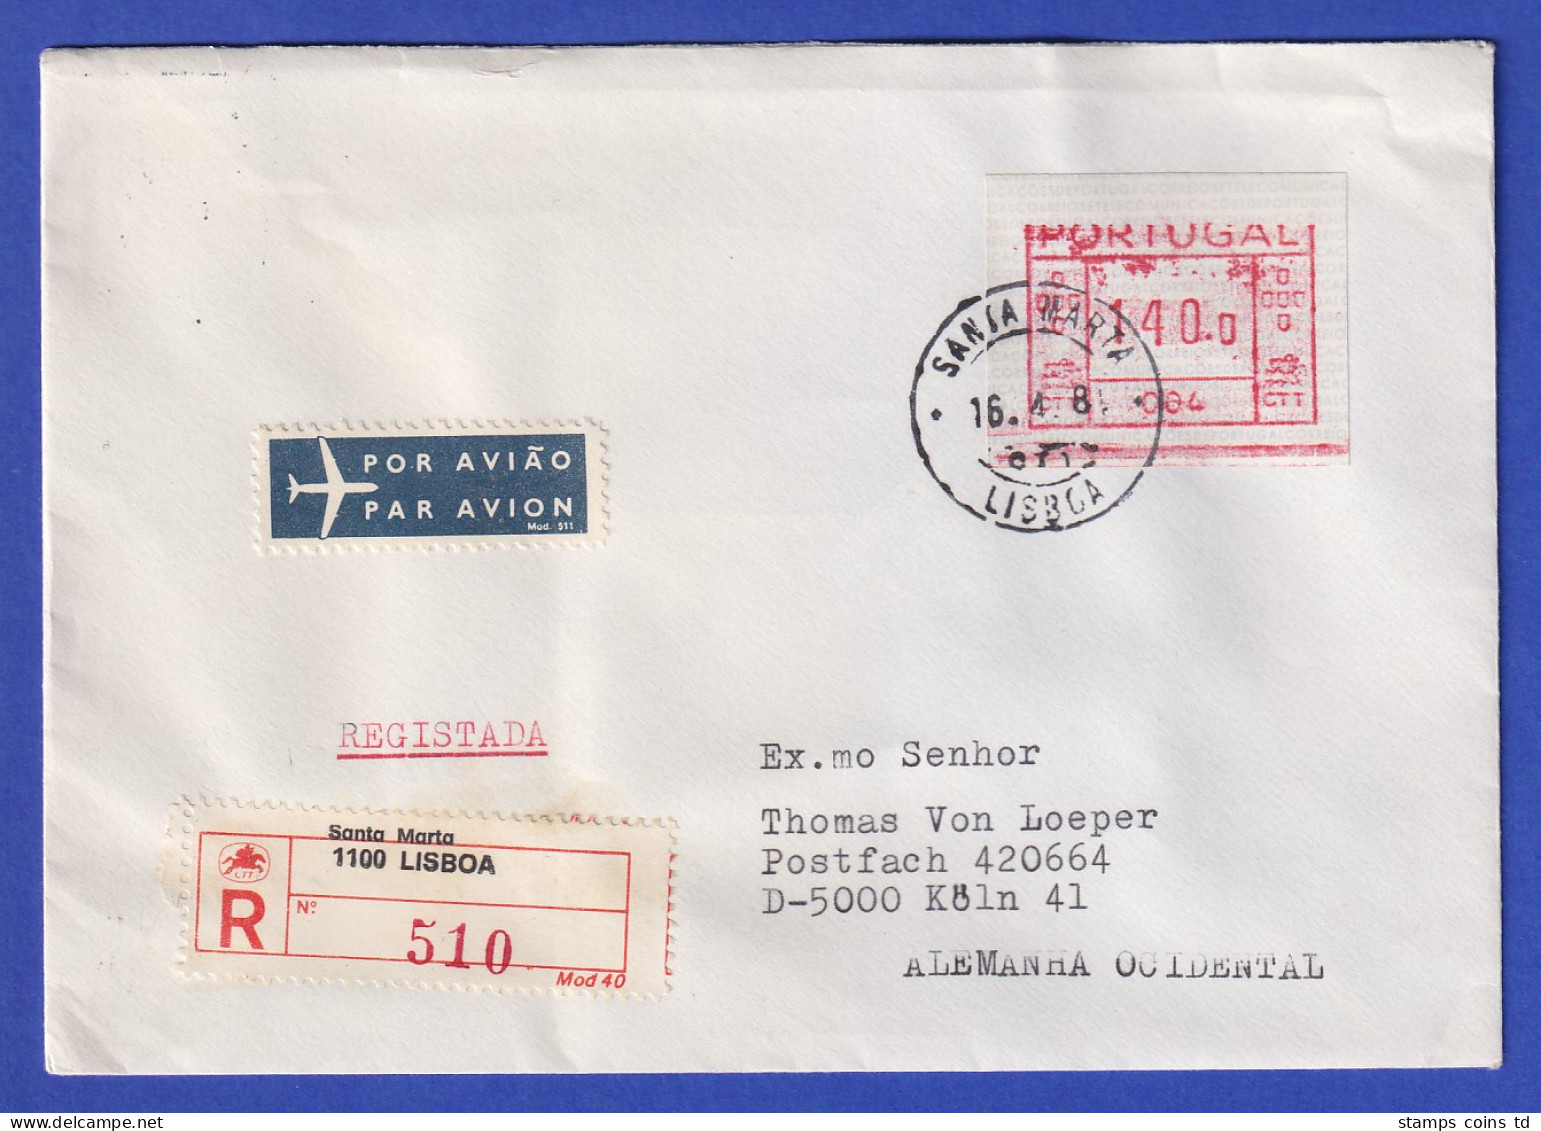 Portugal Frama-ATM 1981 Aut.-Nr. 004  R-Brief Mit ATM Vom OA, Orts-Stempel - Automaatzegels [ATM]